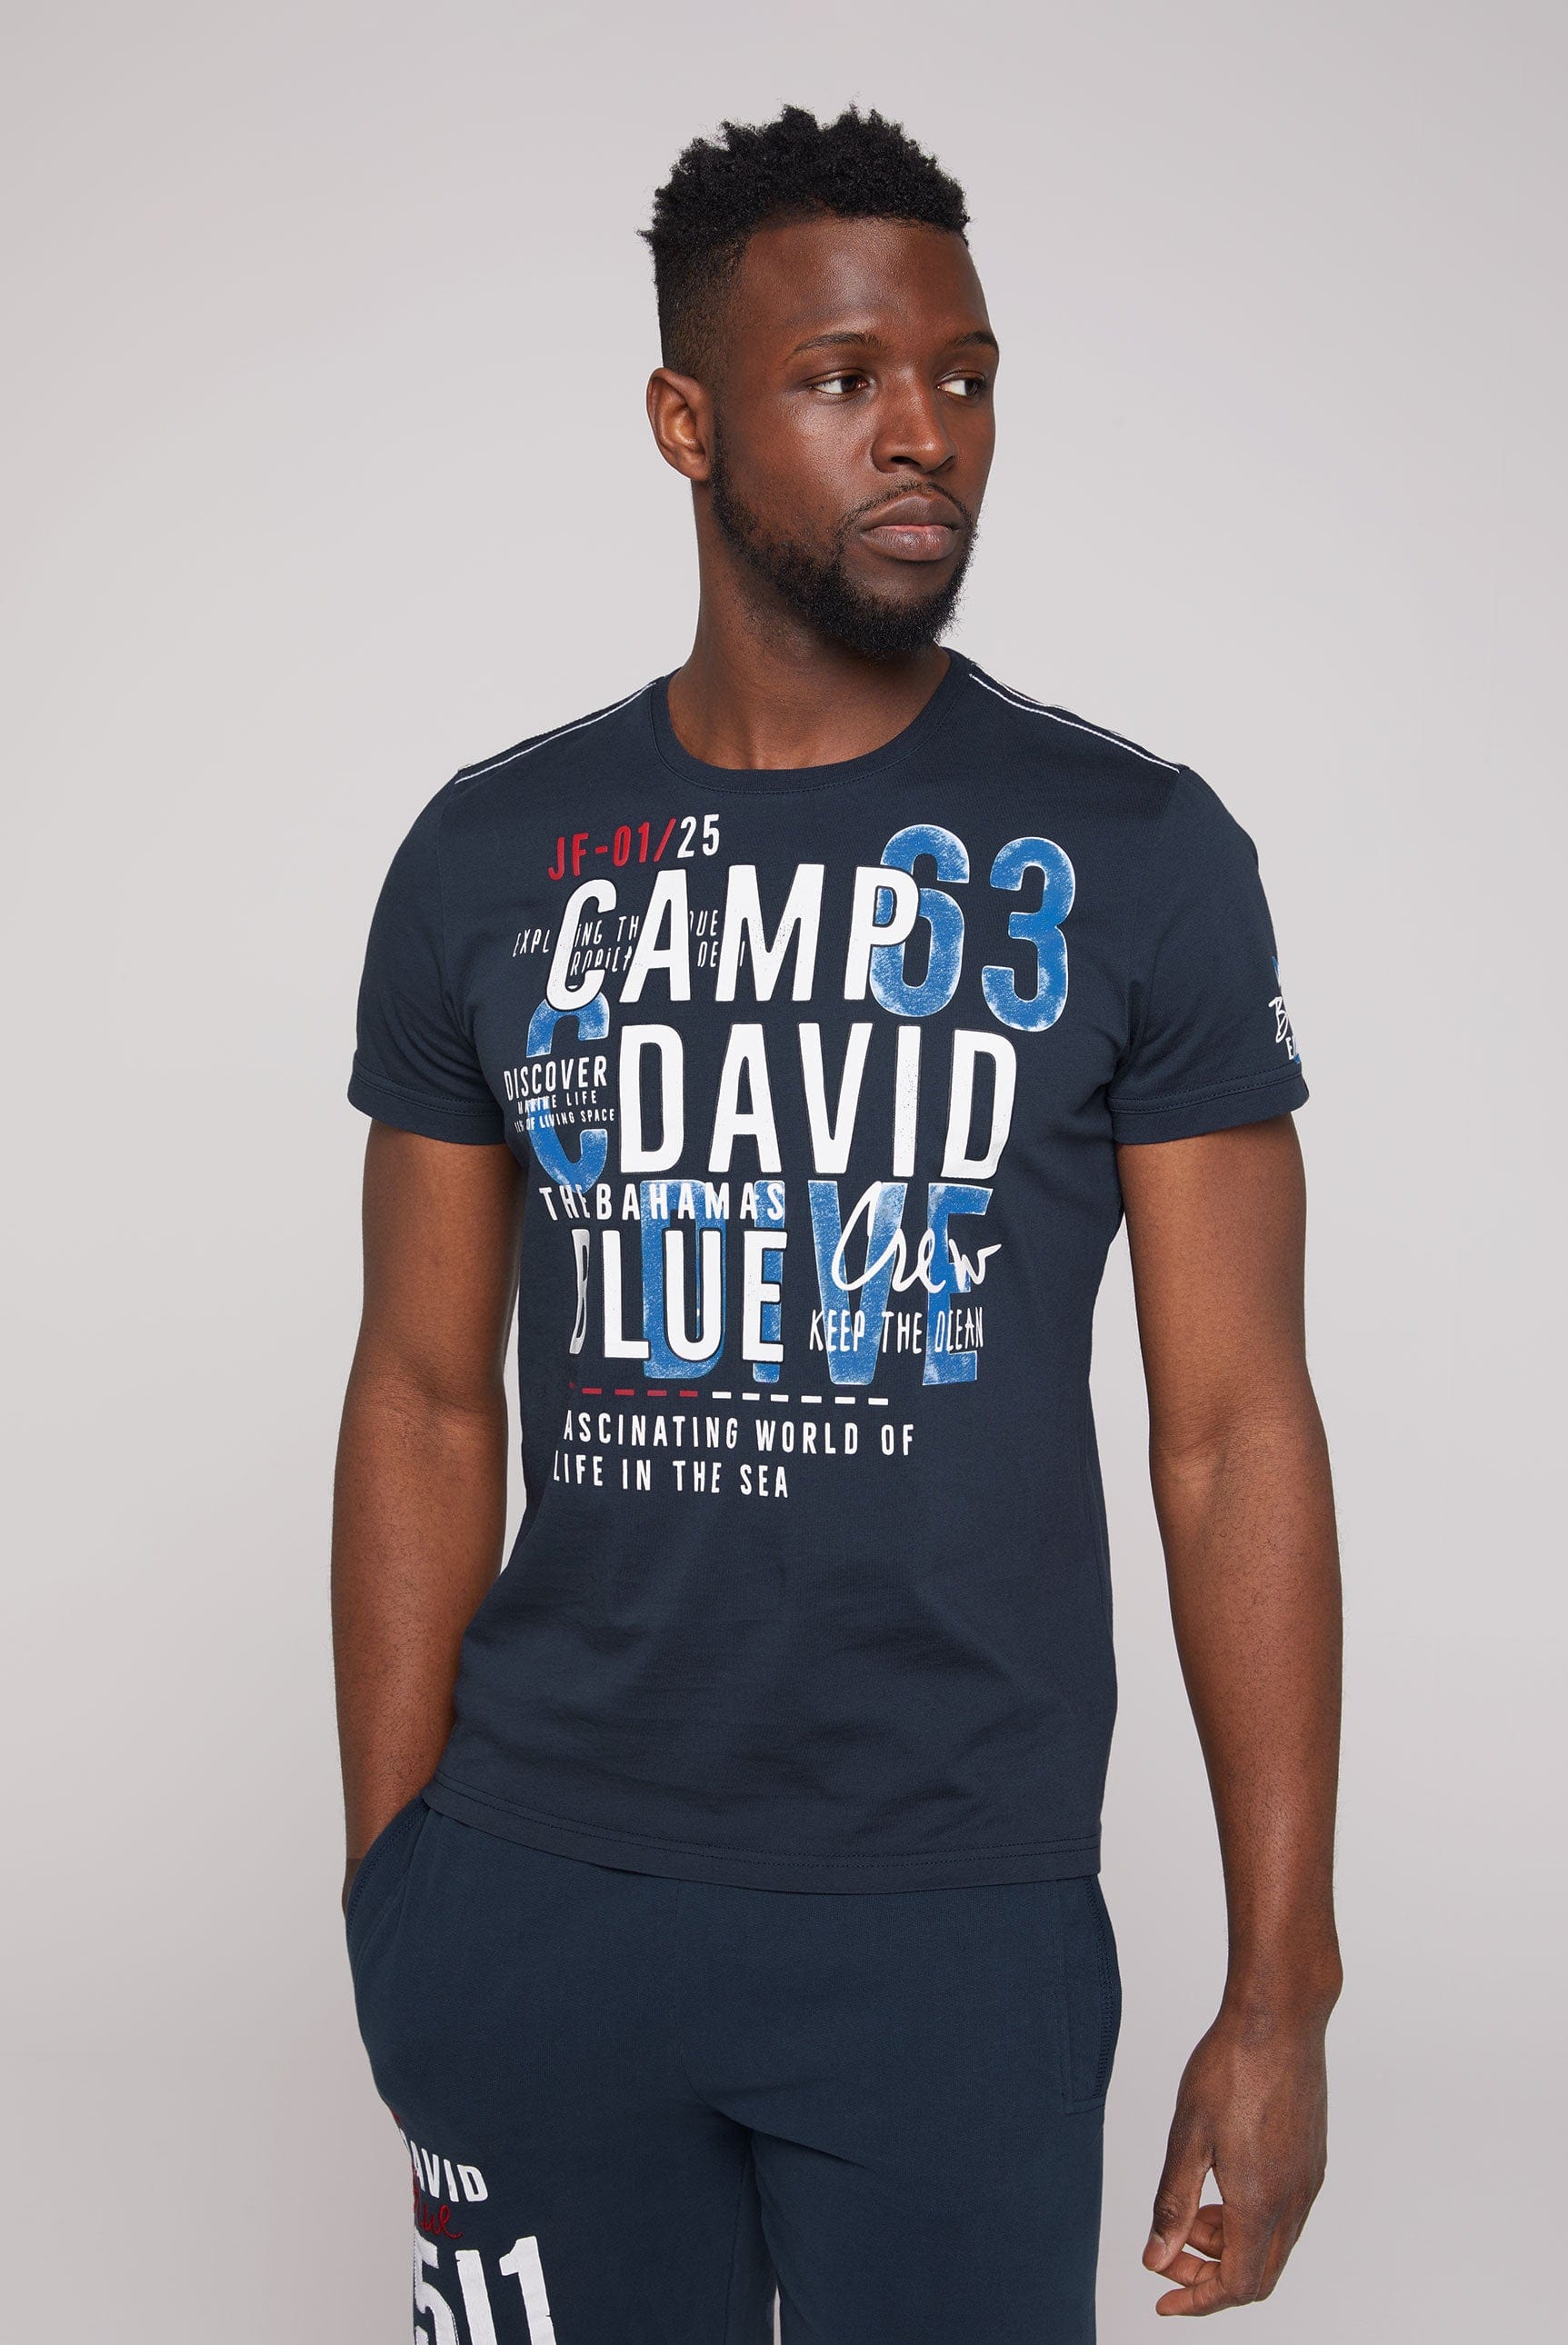 Camp Stateshop Quality David and Versatility Fashion | T-Shirts: